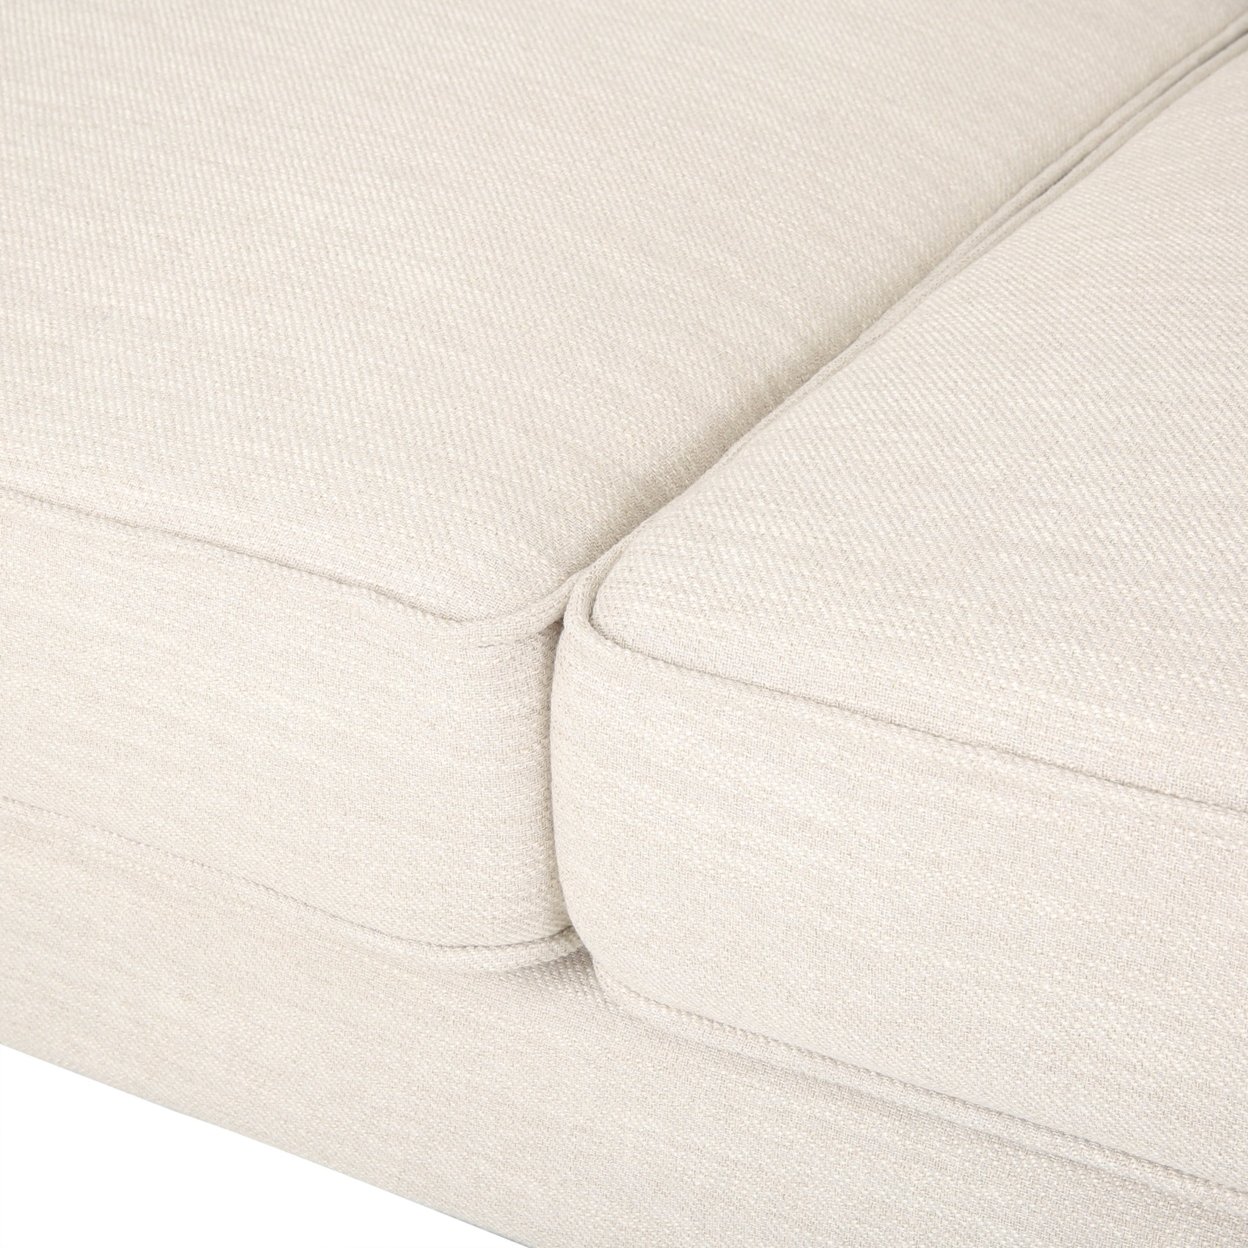 Nimsi Contemporary 3 Seater Fabric Sofa - Beige